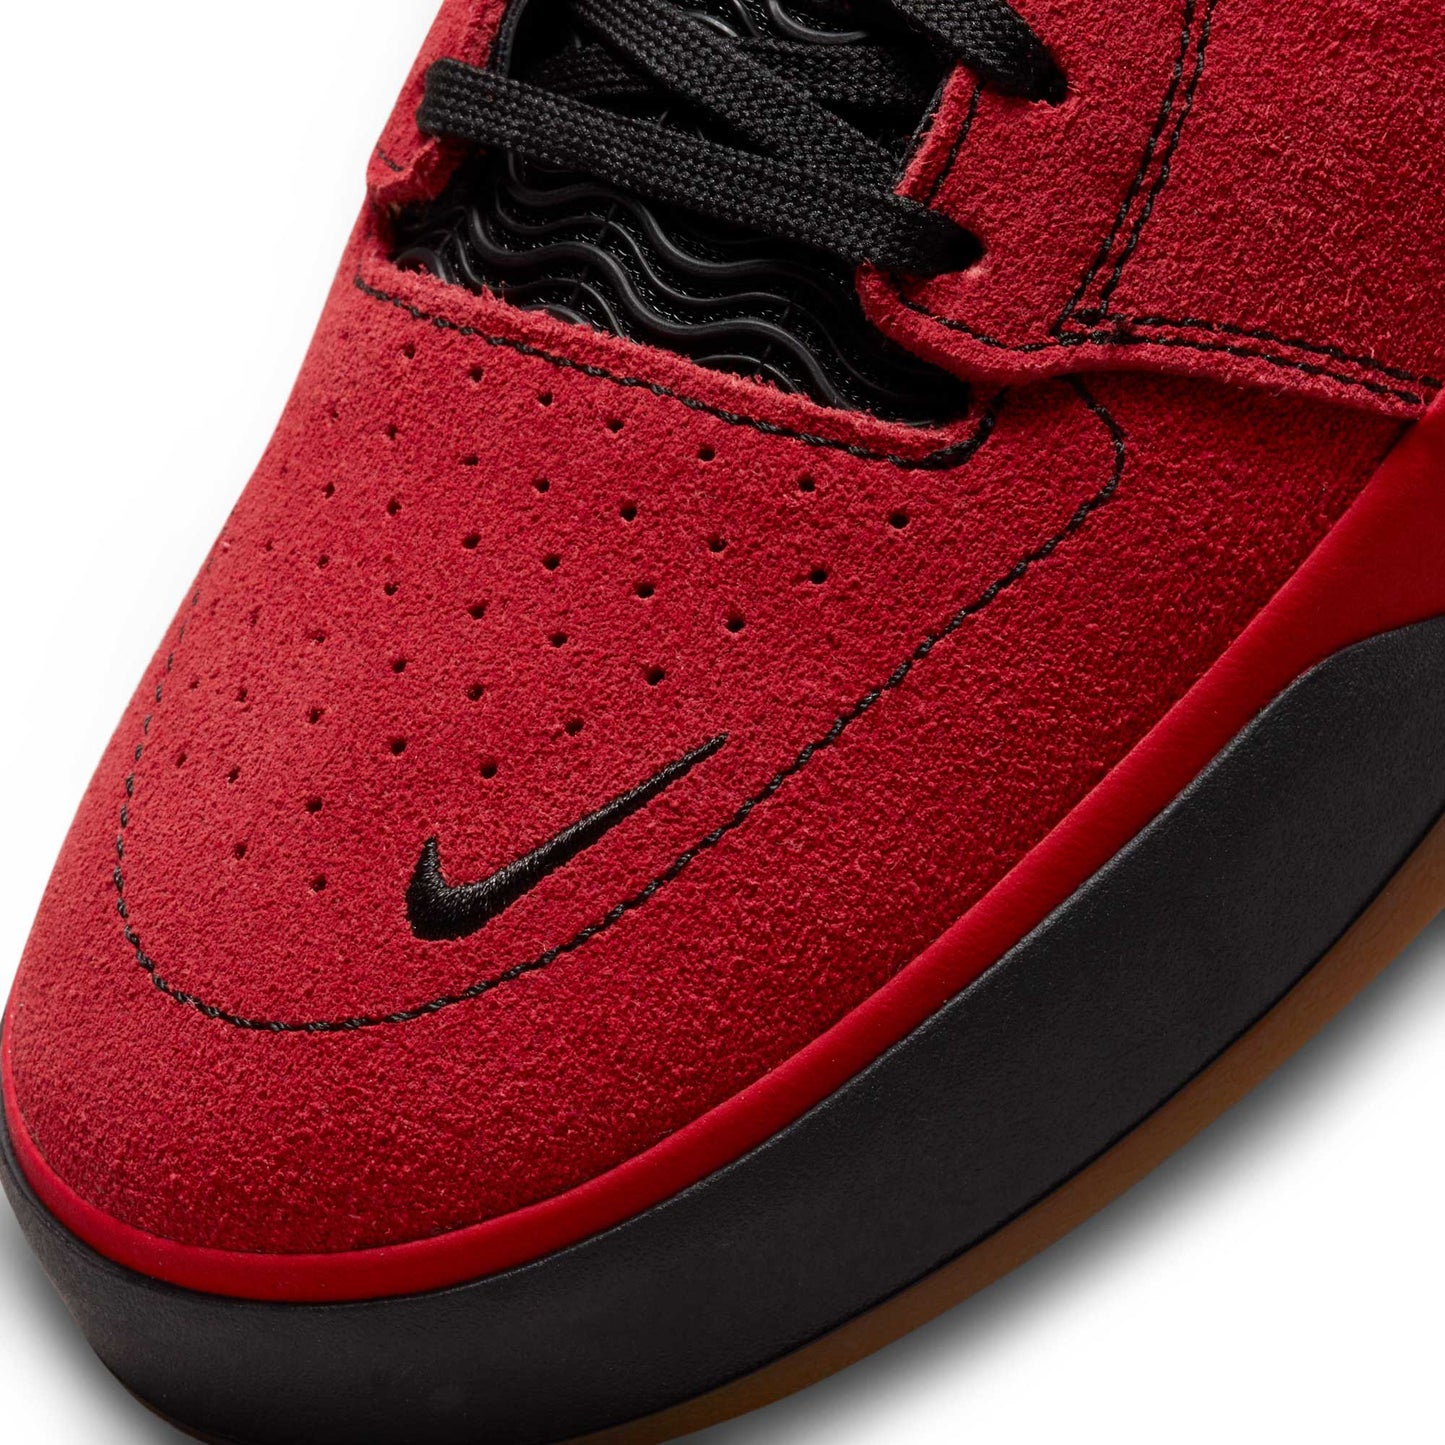 Nike SB Ishod Wair, varsity red/black-varsity red-white - Tiki Room Skateboards - 9